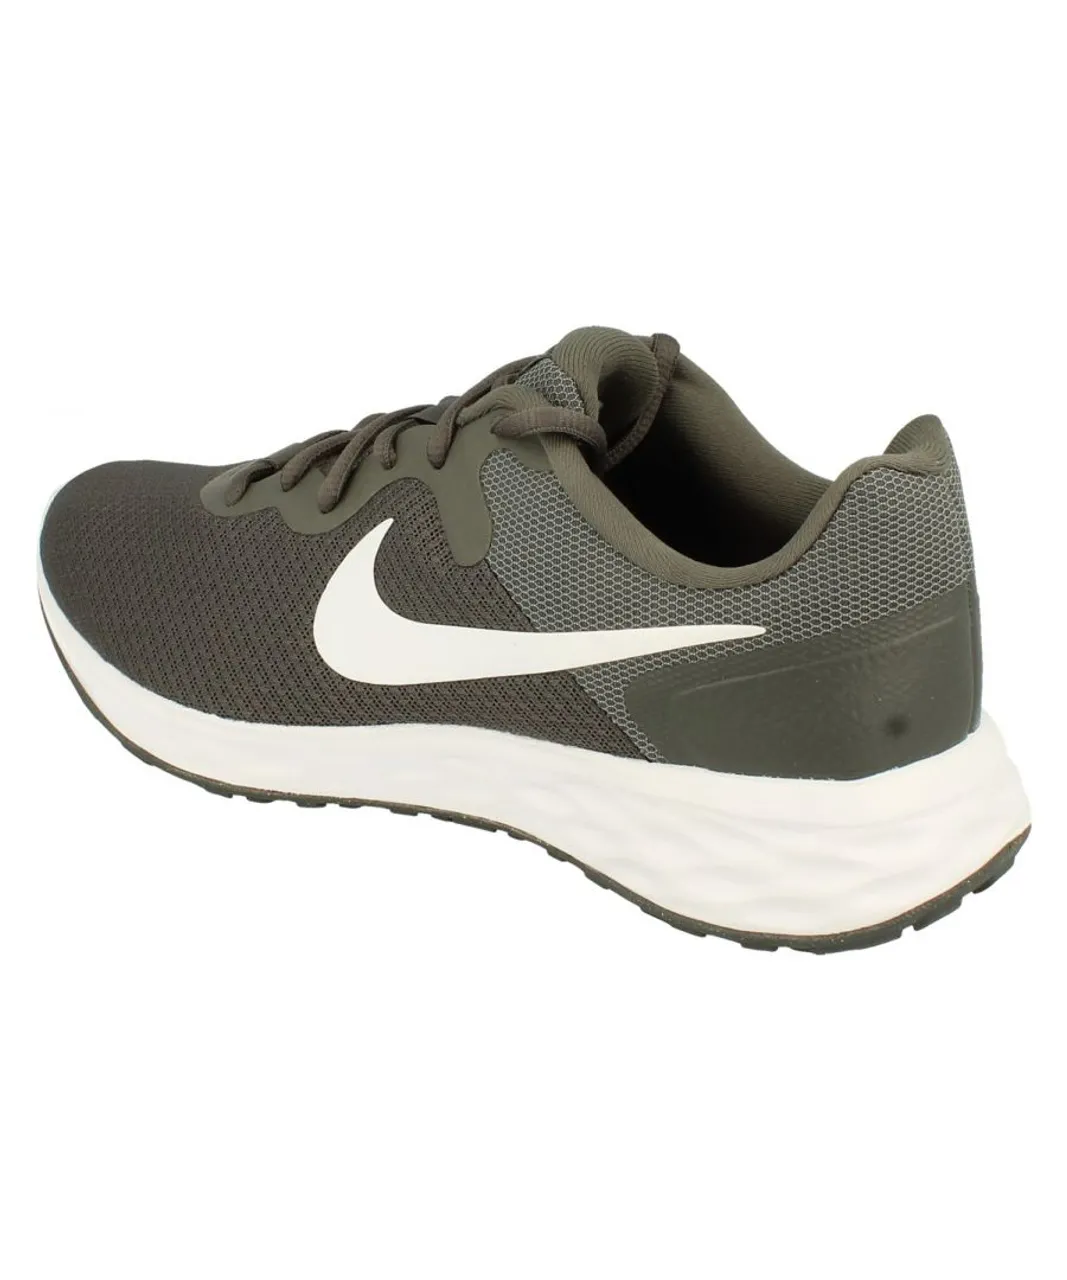 Nike Revolution 6 Nn Mens Grey Trainers